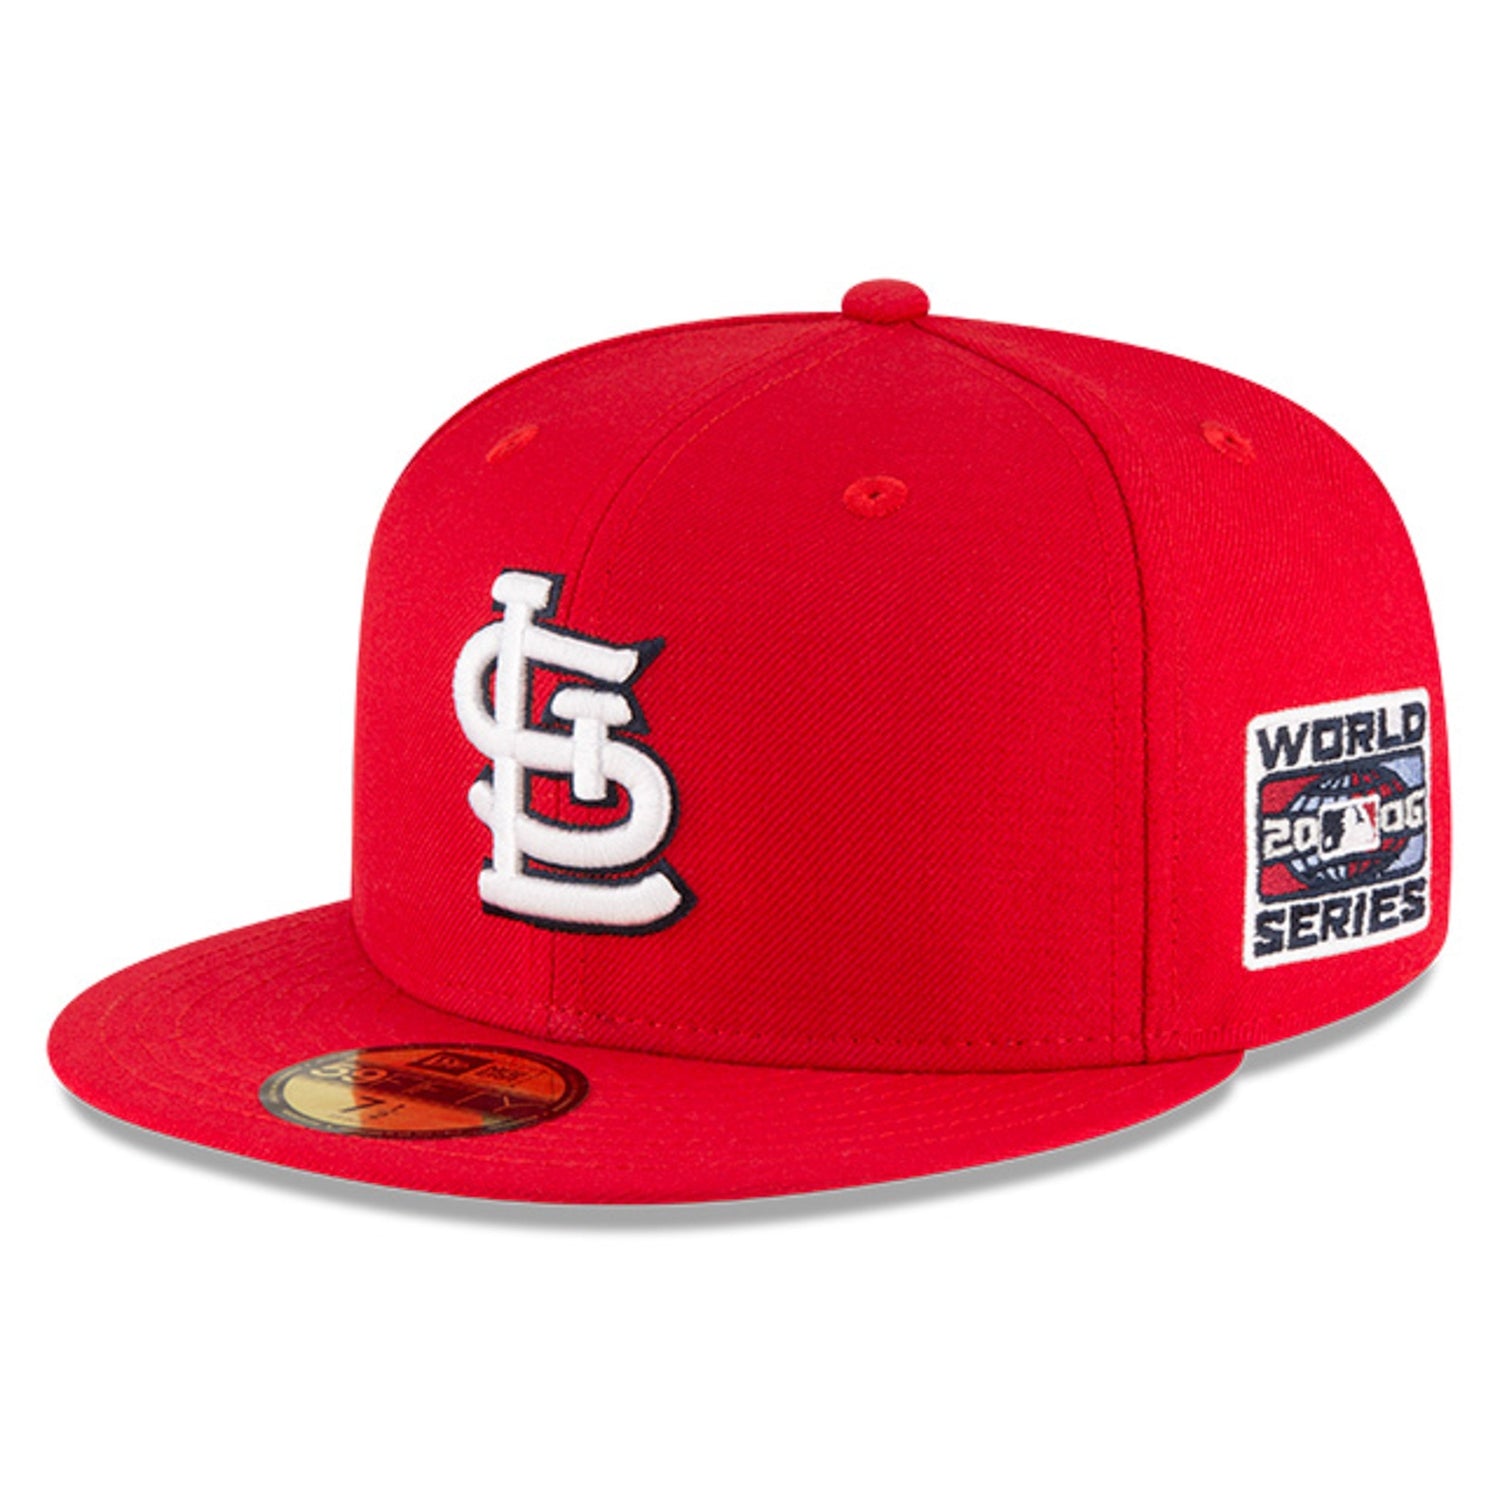 St. Louis Cardinals PINWHEEL White-Black Fitted Hat